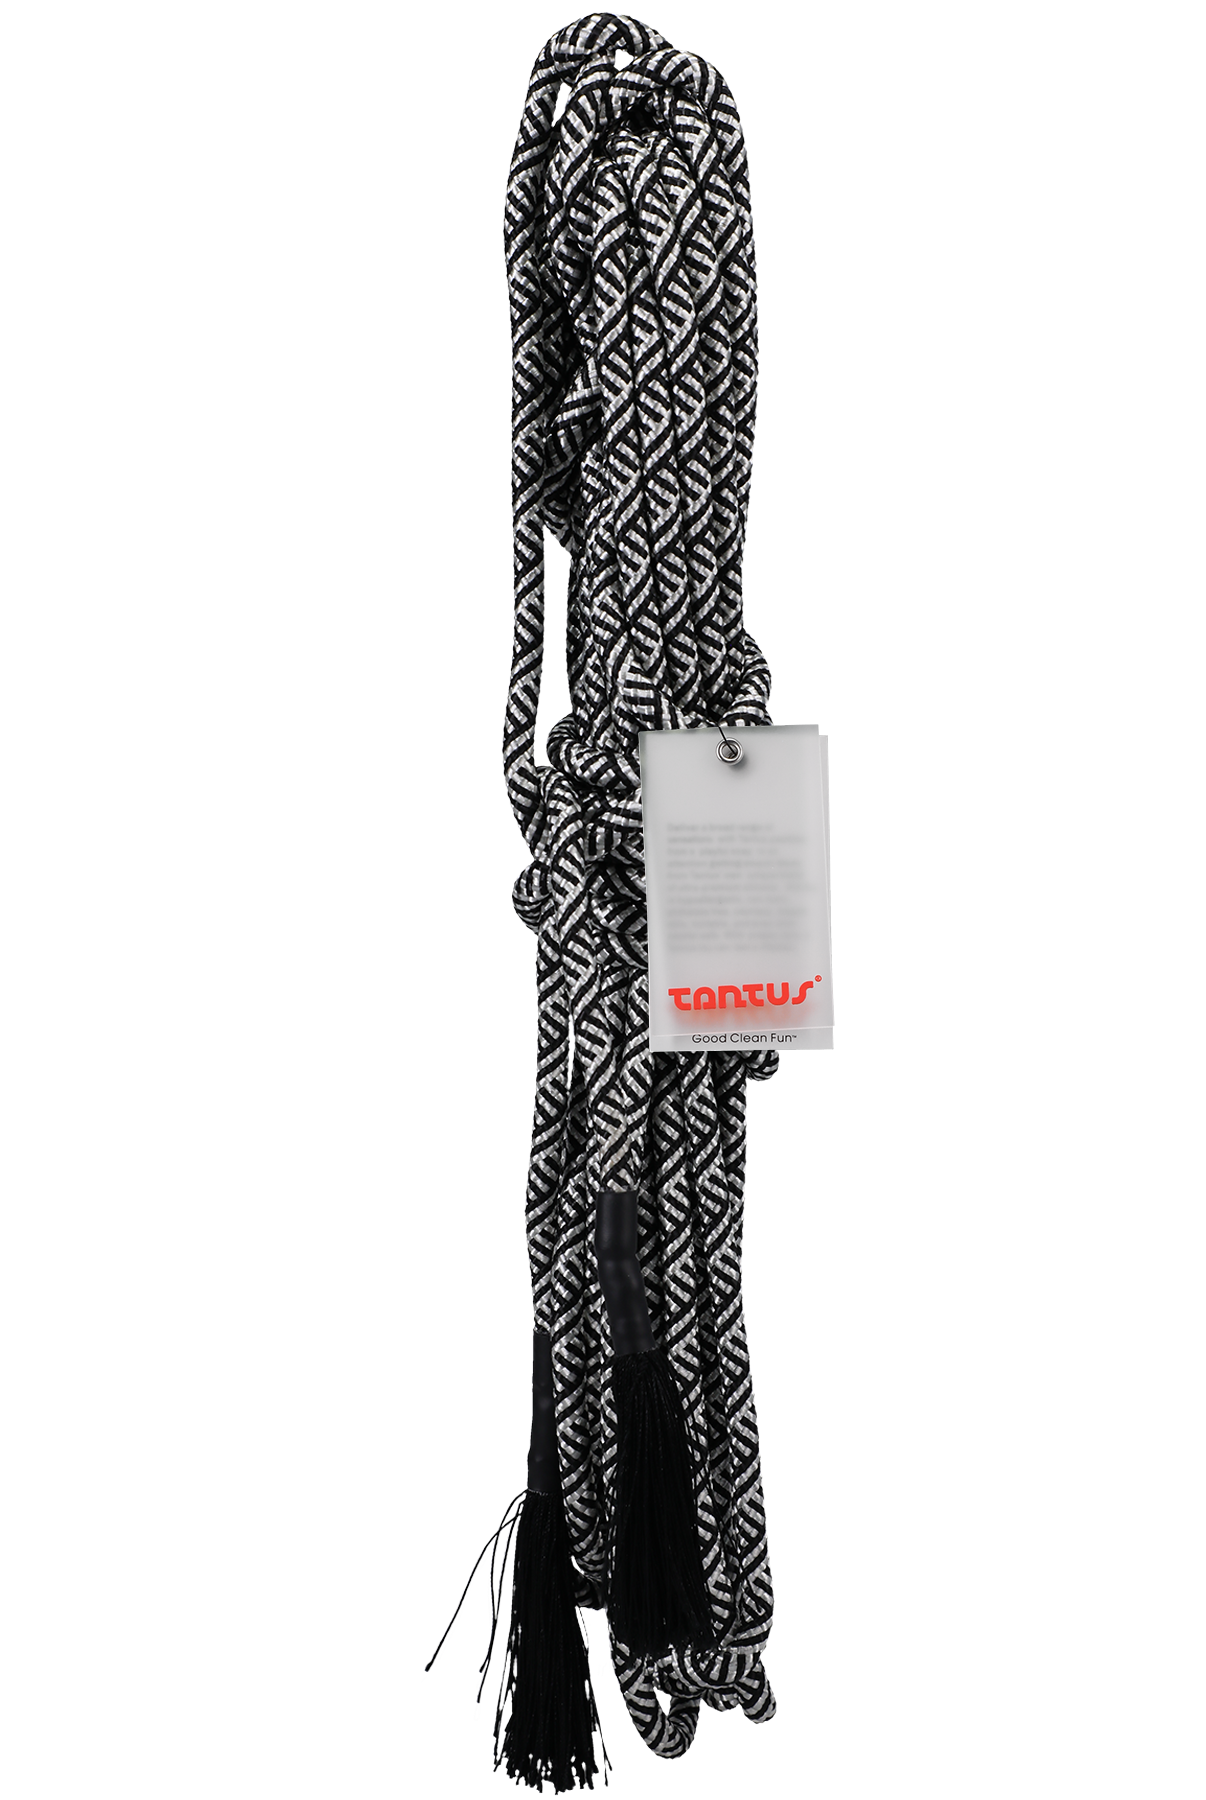 Rope - 30 Feet - Silver, Onyx - ACME Pleasure